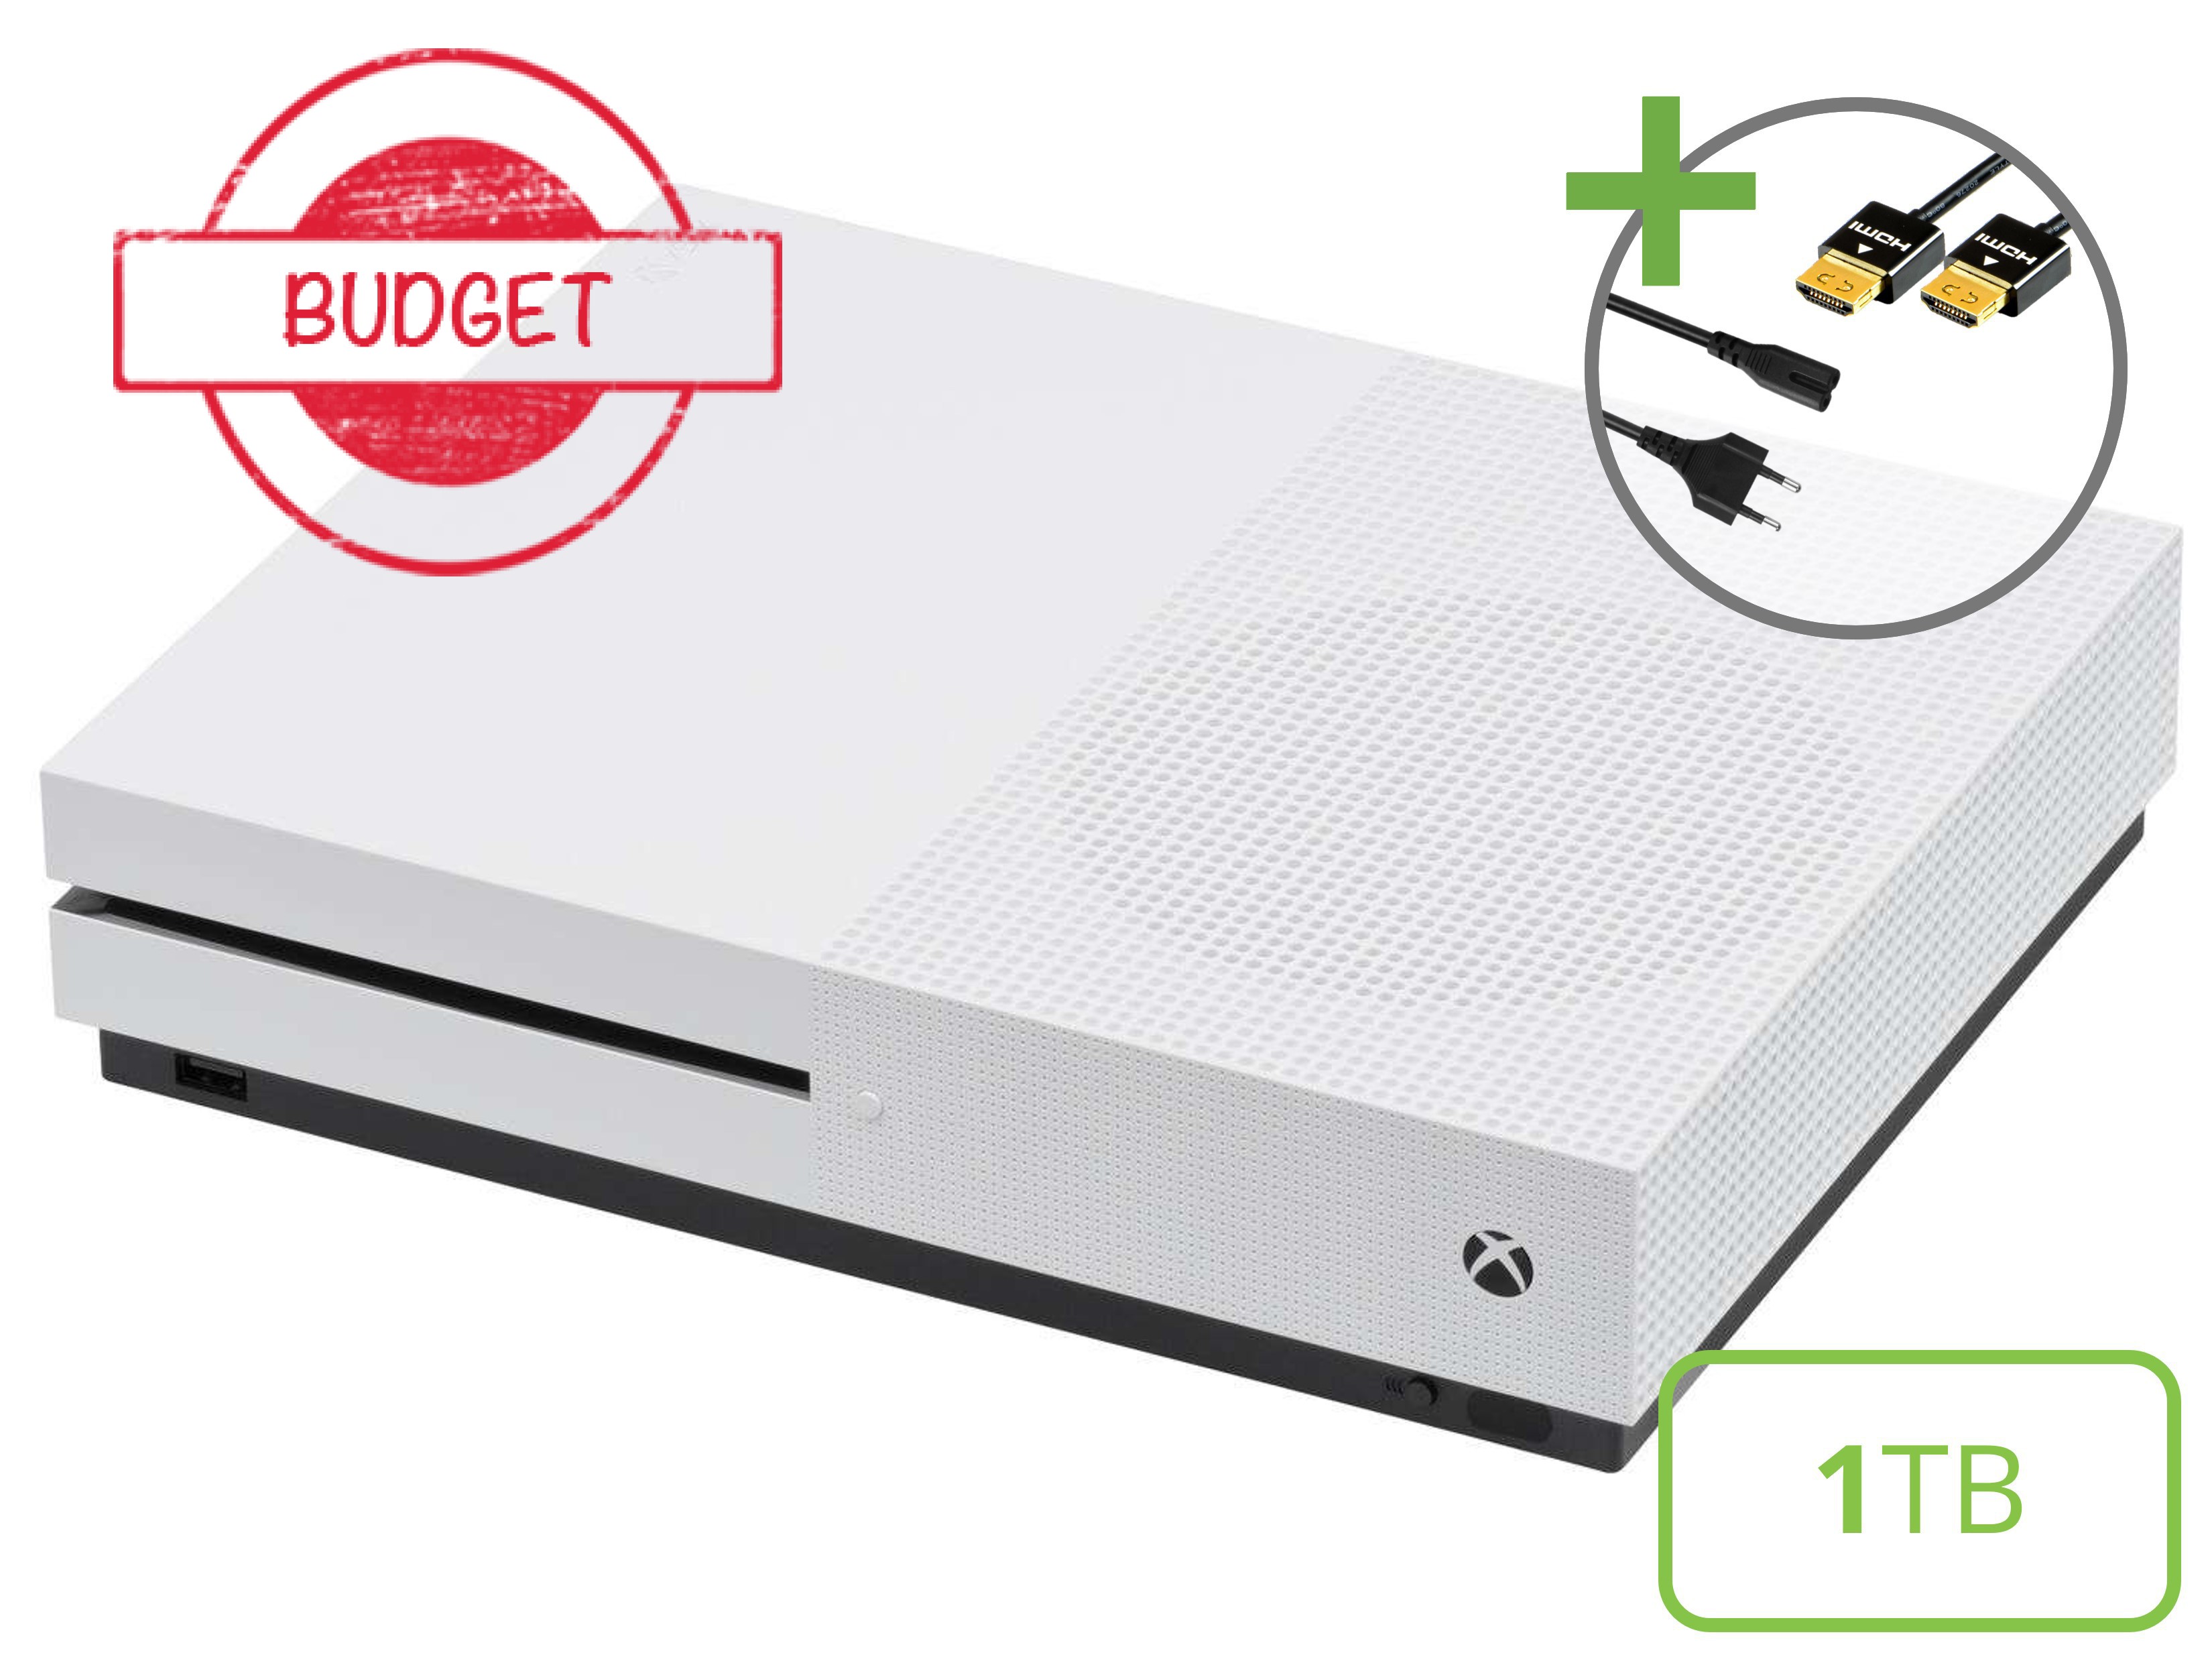 Microsoft Xbox One S Starter Pack - 1TB Forza Horizon 4  Edition - Budget - Xbox One Hardware - 2